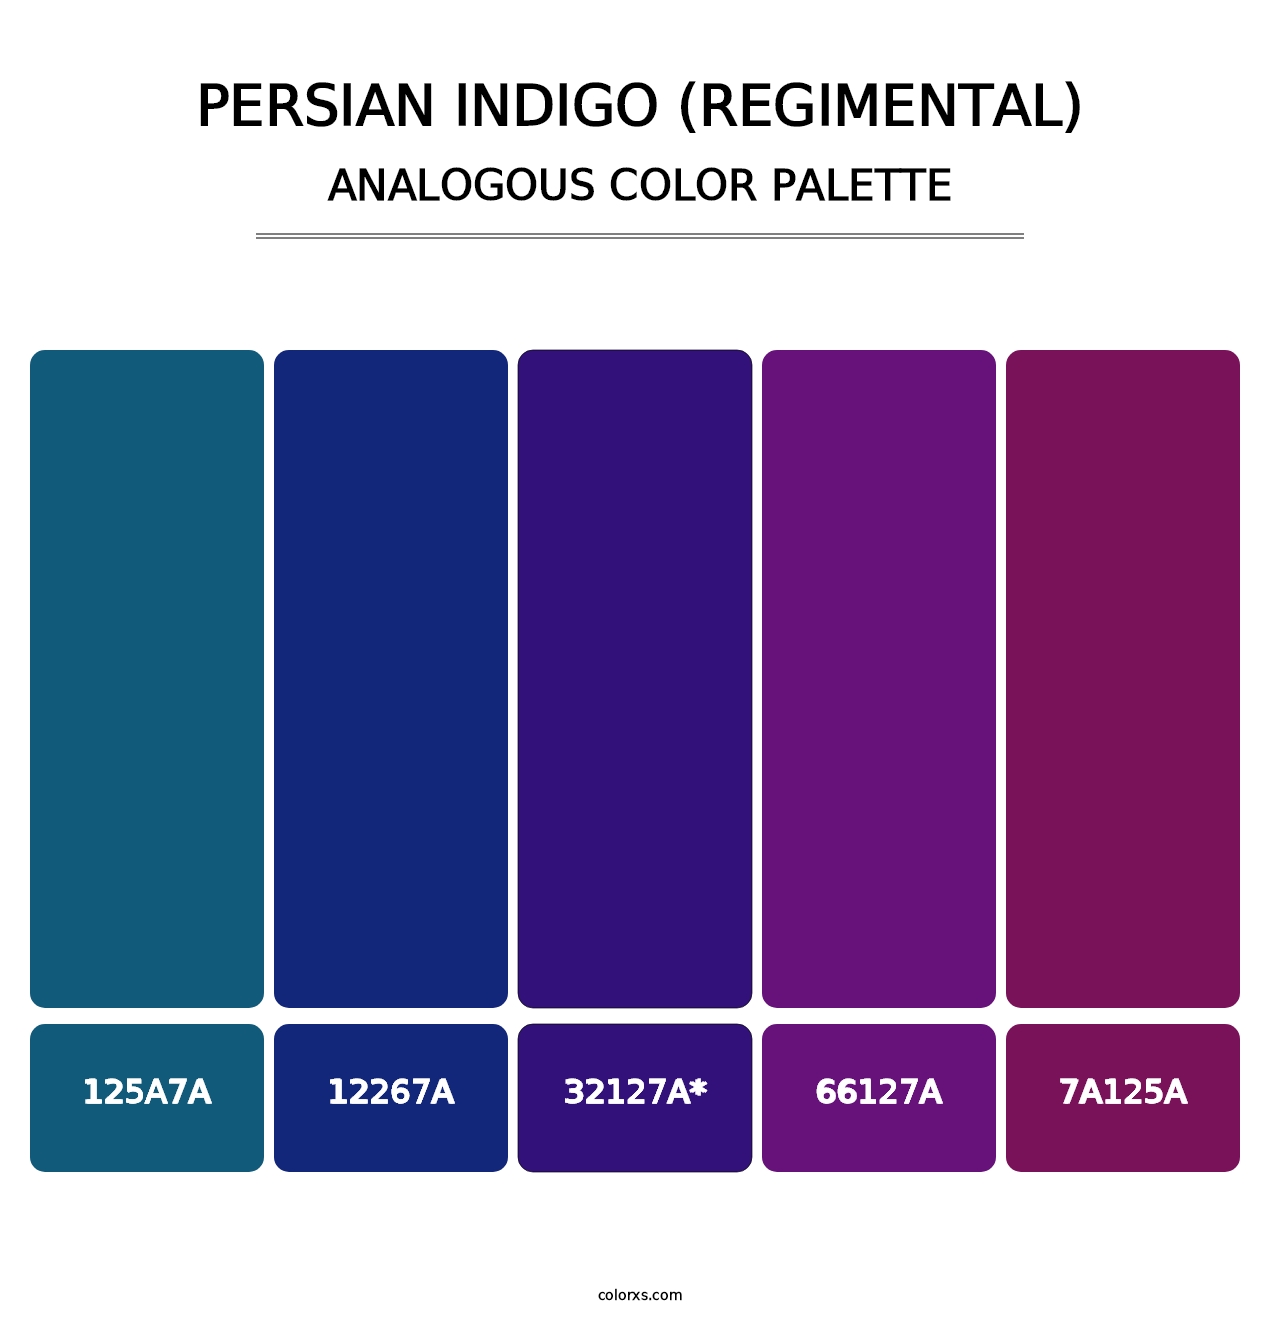 Persian Indigo (Regimental) - Analogous Color Palette